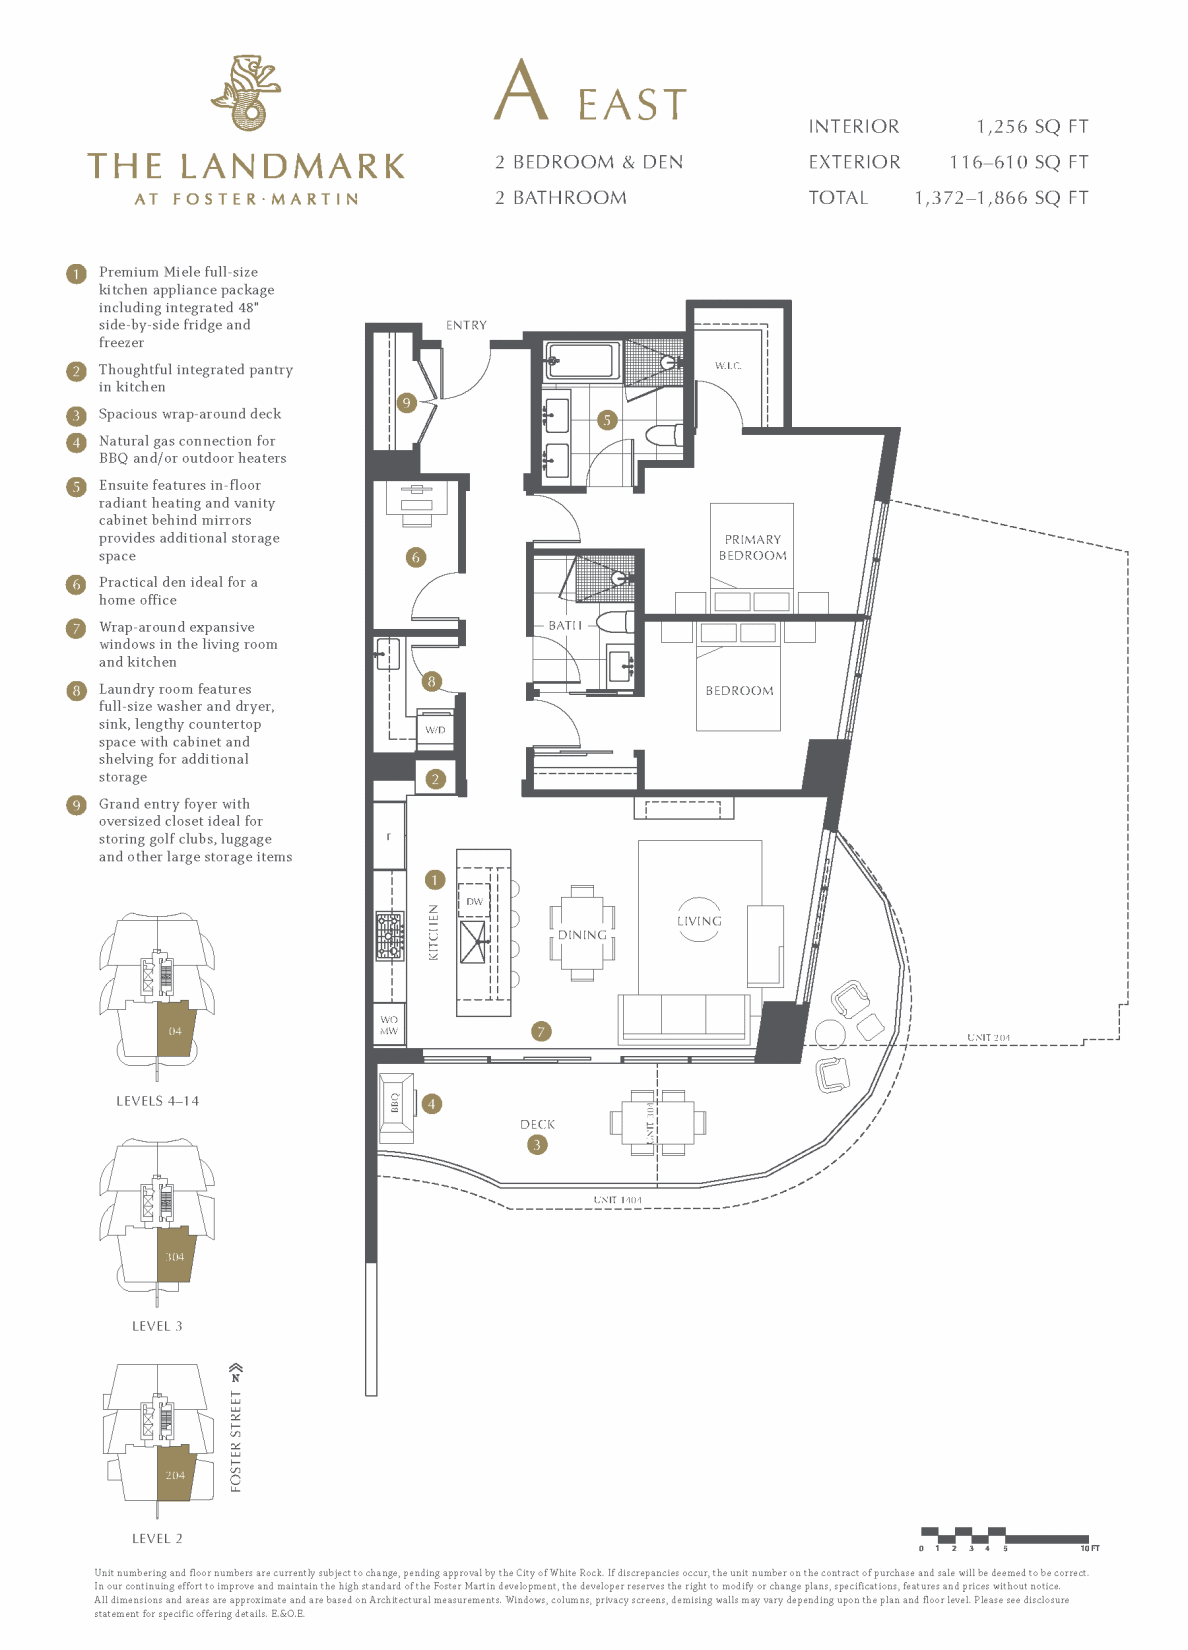 The Landmark Floor Plan A-E